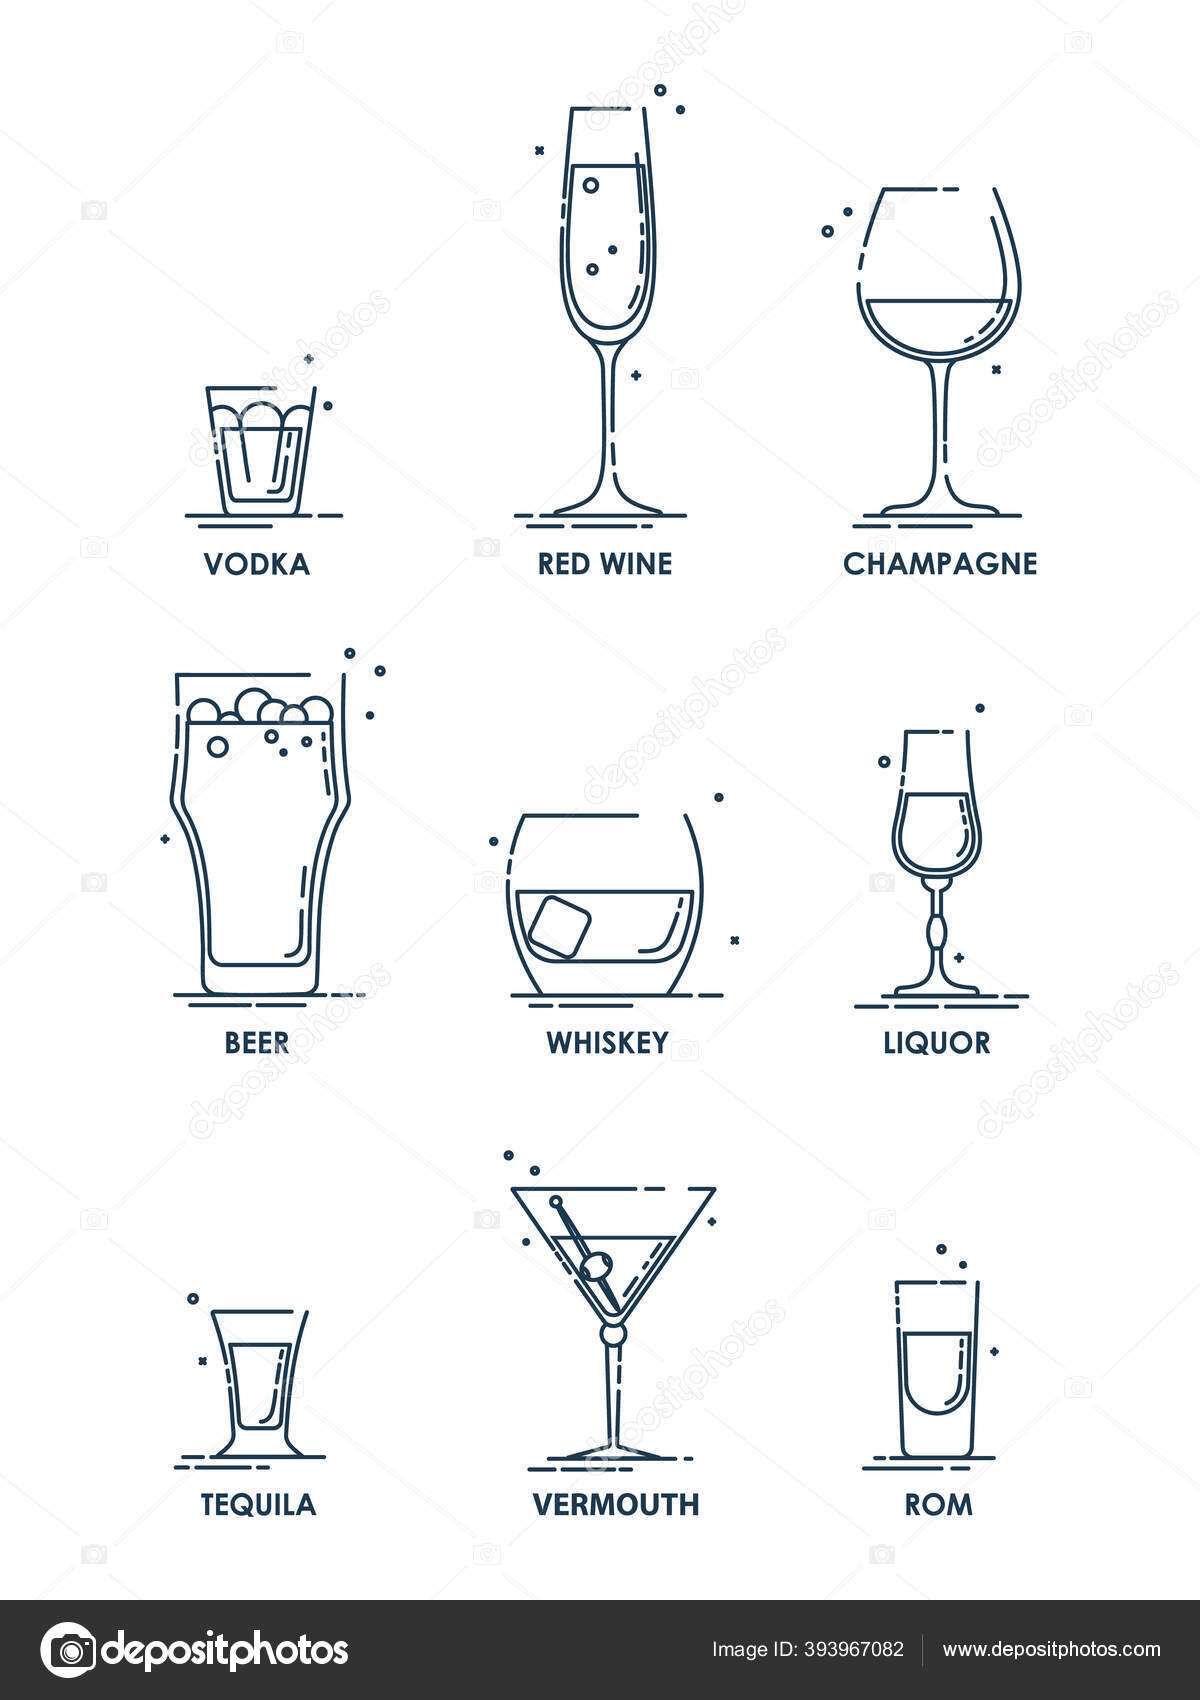 https://st4.depositphotos.com/38382674/39396/v/1600/depositphotos_393967082-stock-illustration-drink-glass-alcohol-concept-beverage.jpg